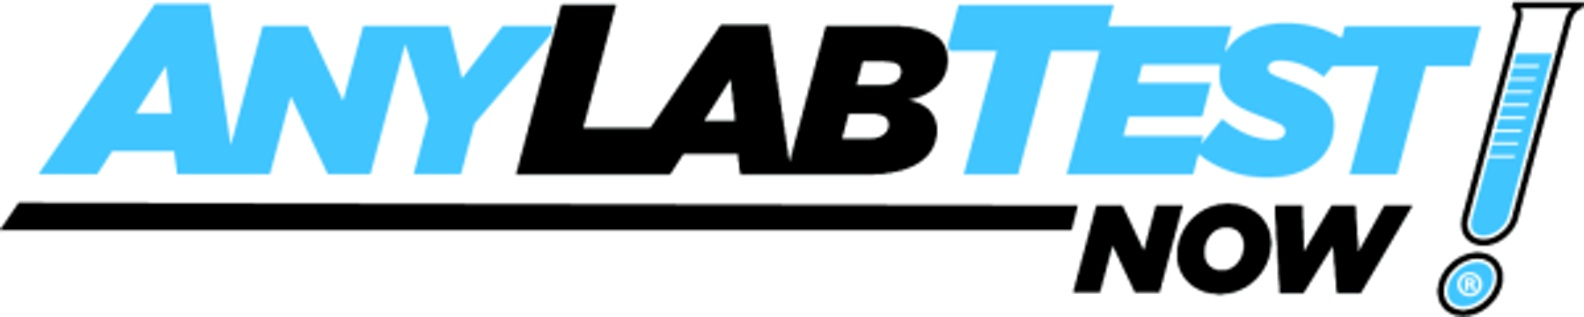 Any Lab Test Now - Houston - Medical Center Logo